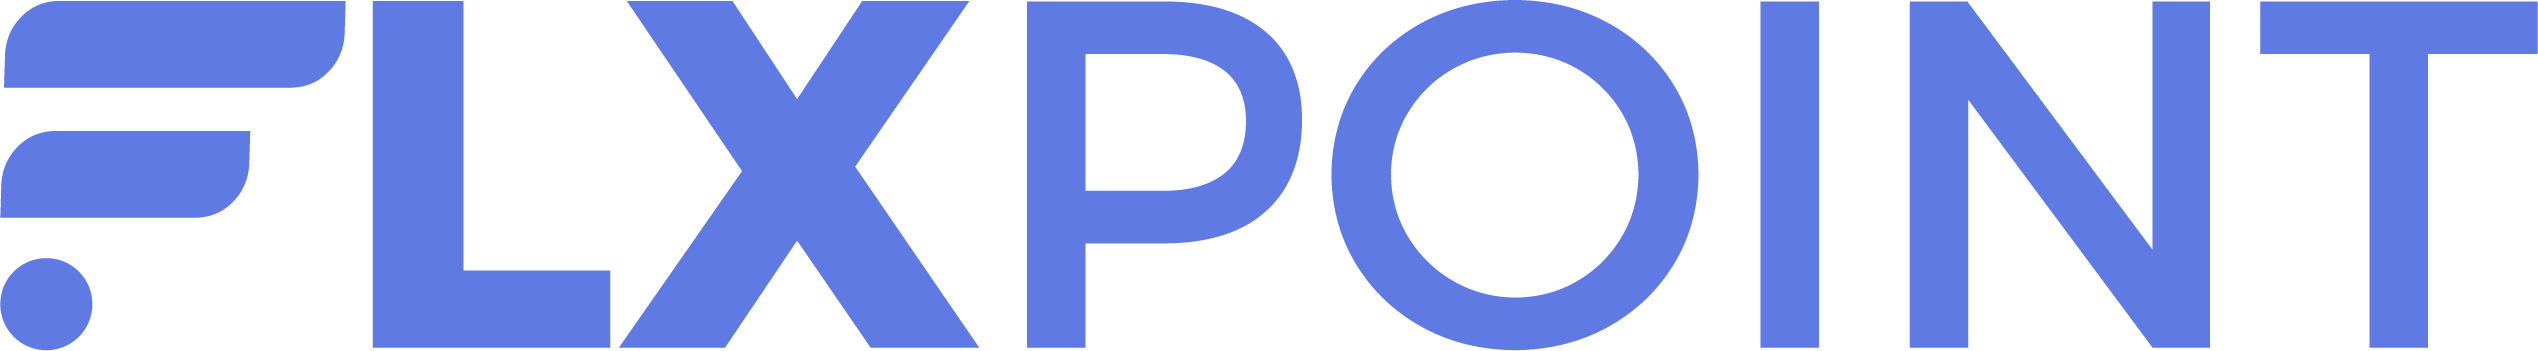 Flxpoint logo.